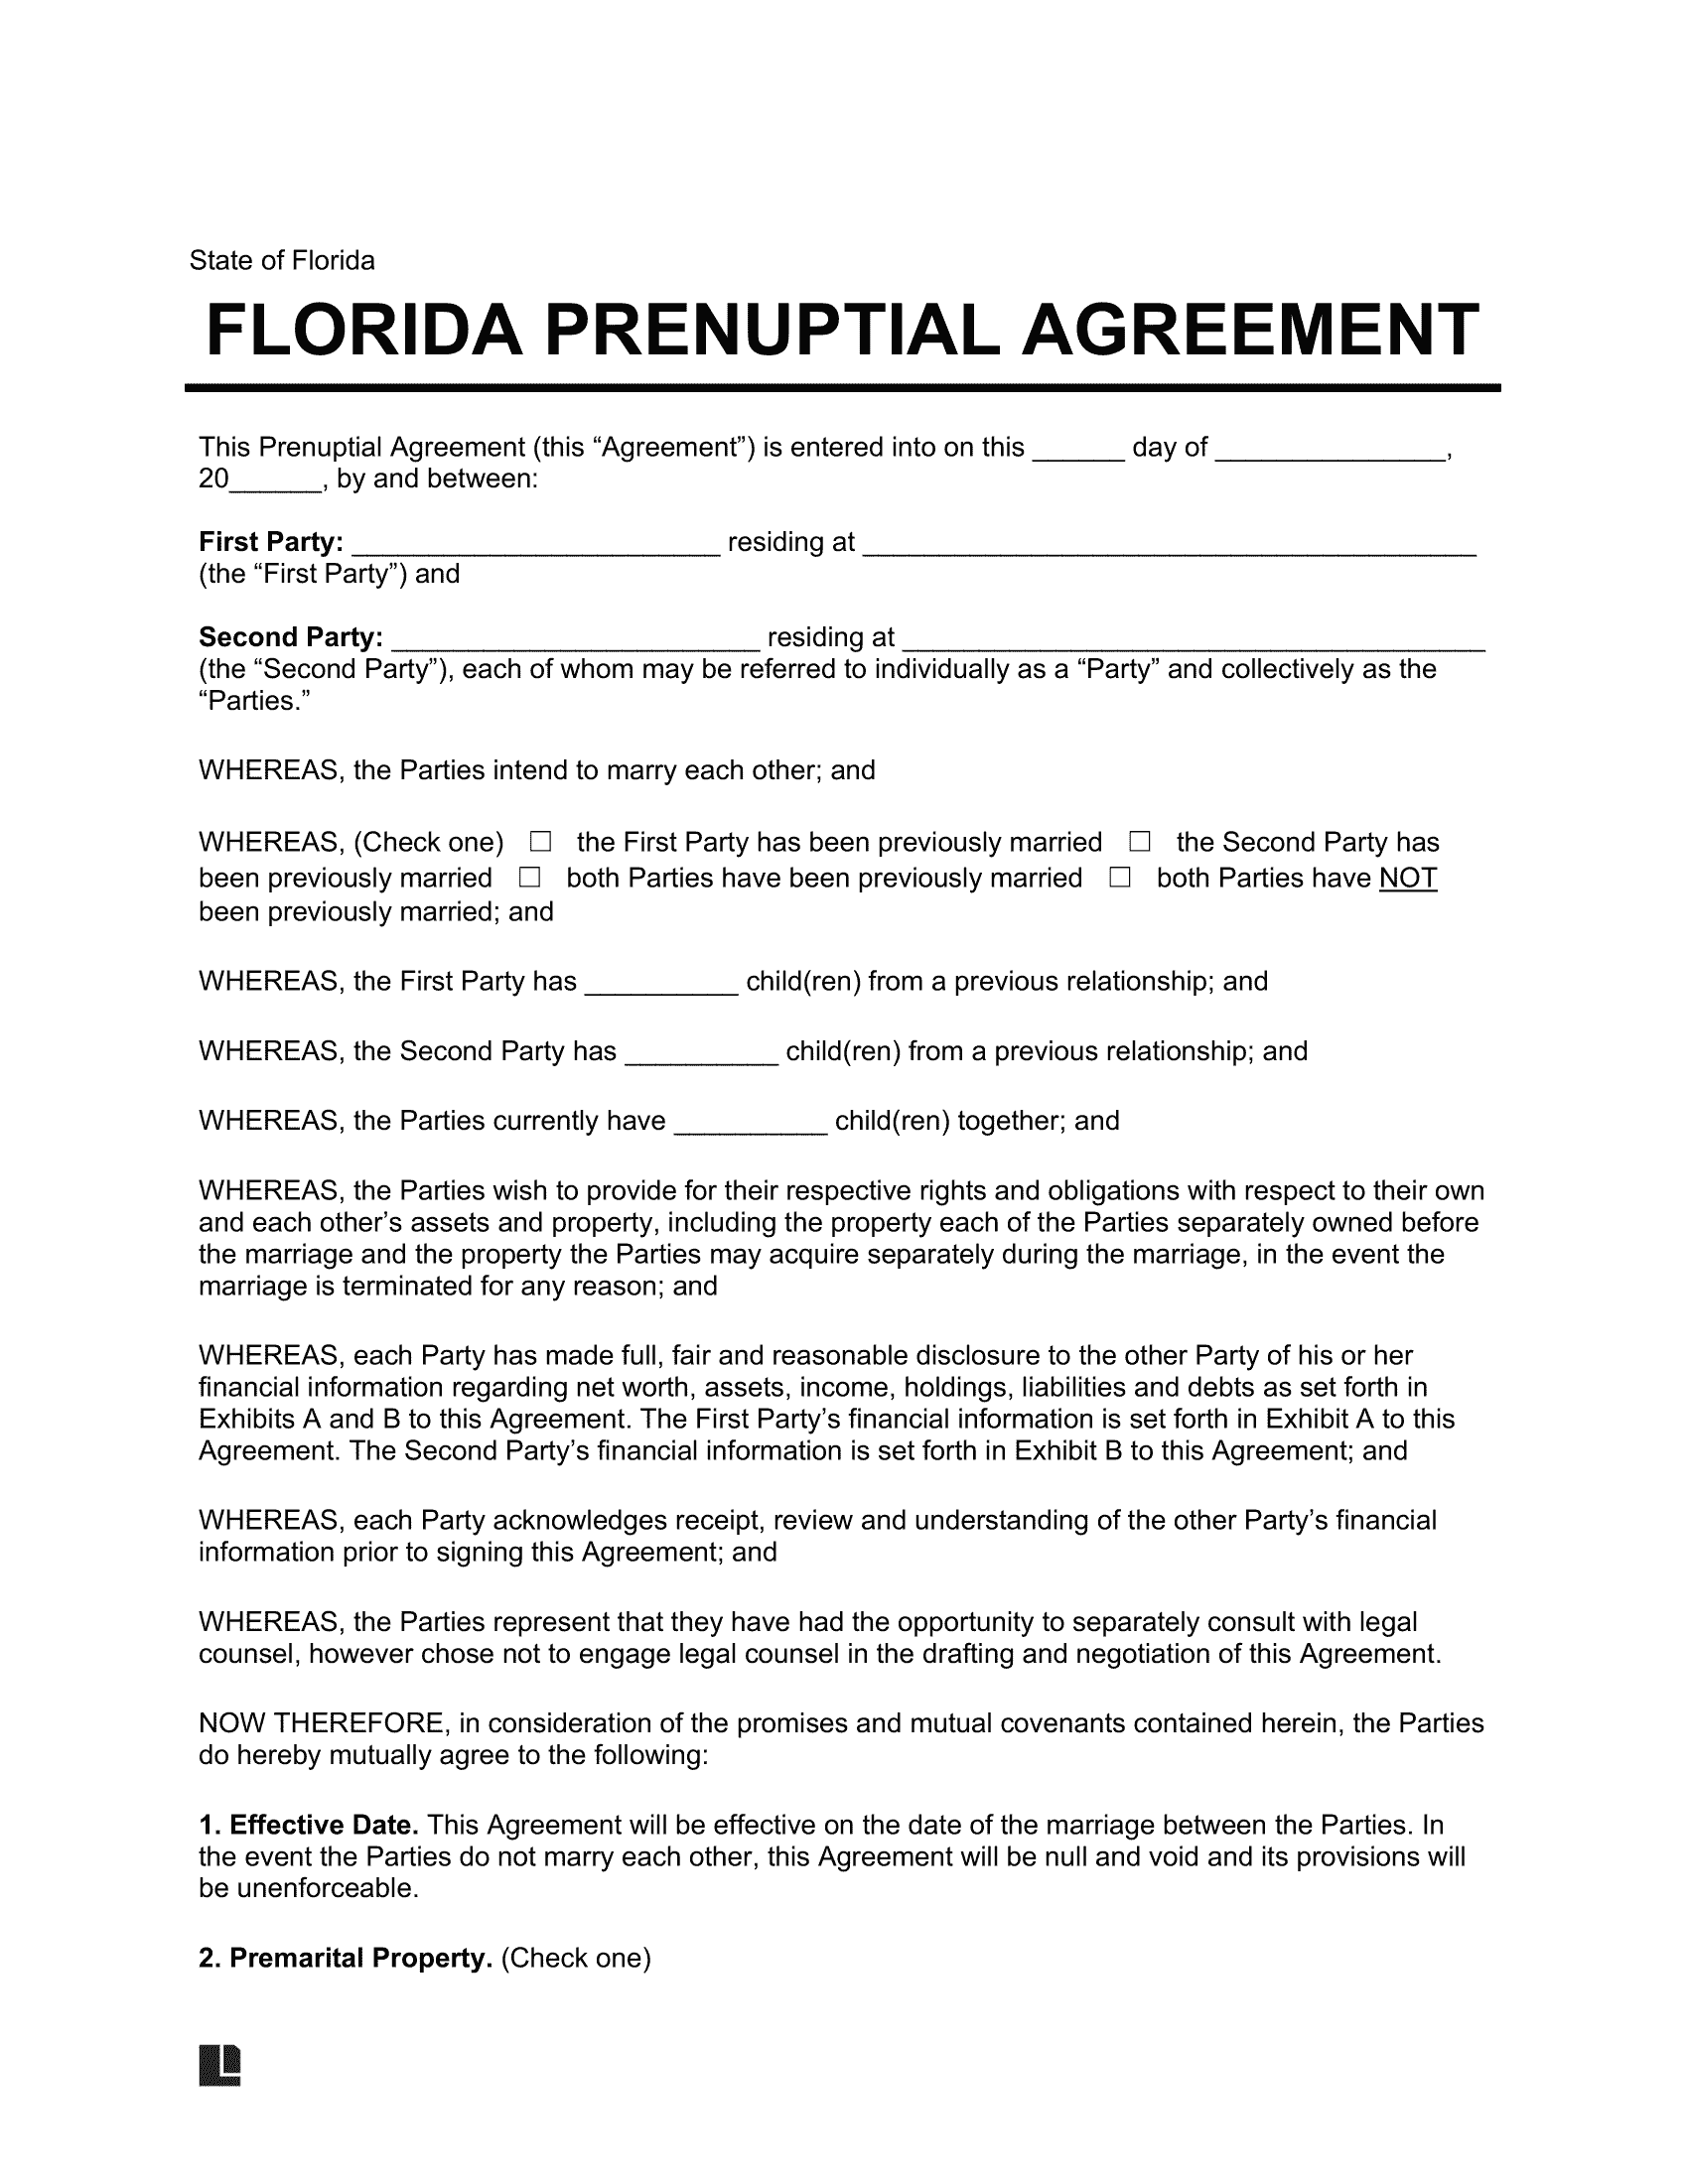 Florida Prenuptial Agreement Template